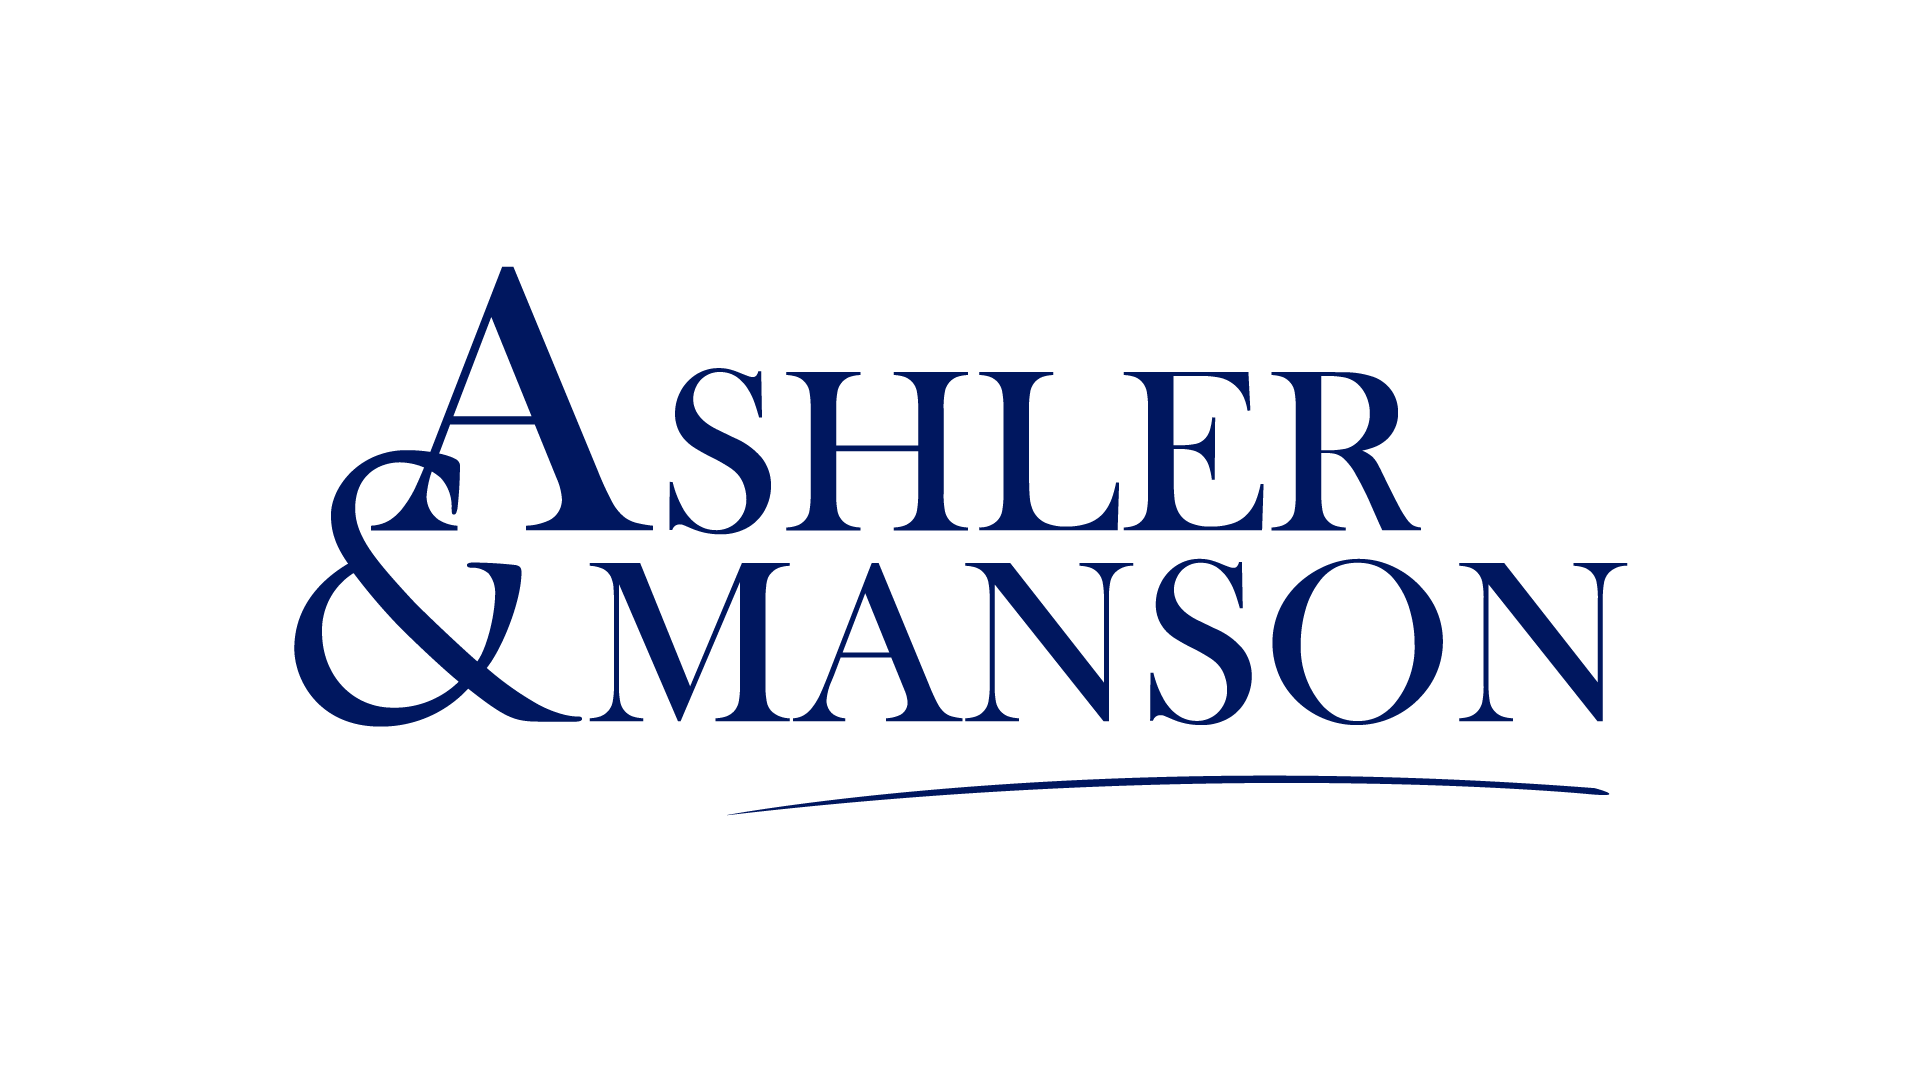 Ashler & Manson logo